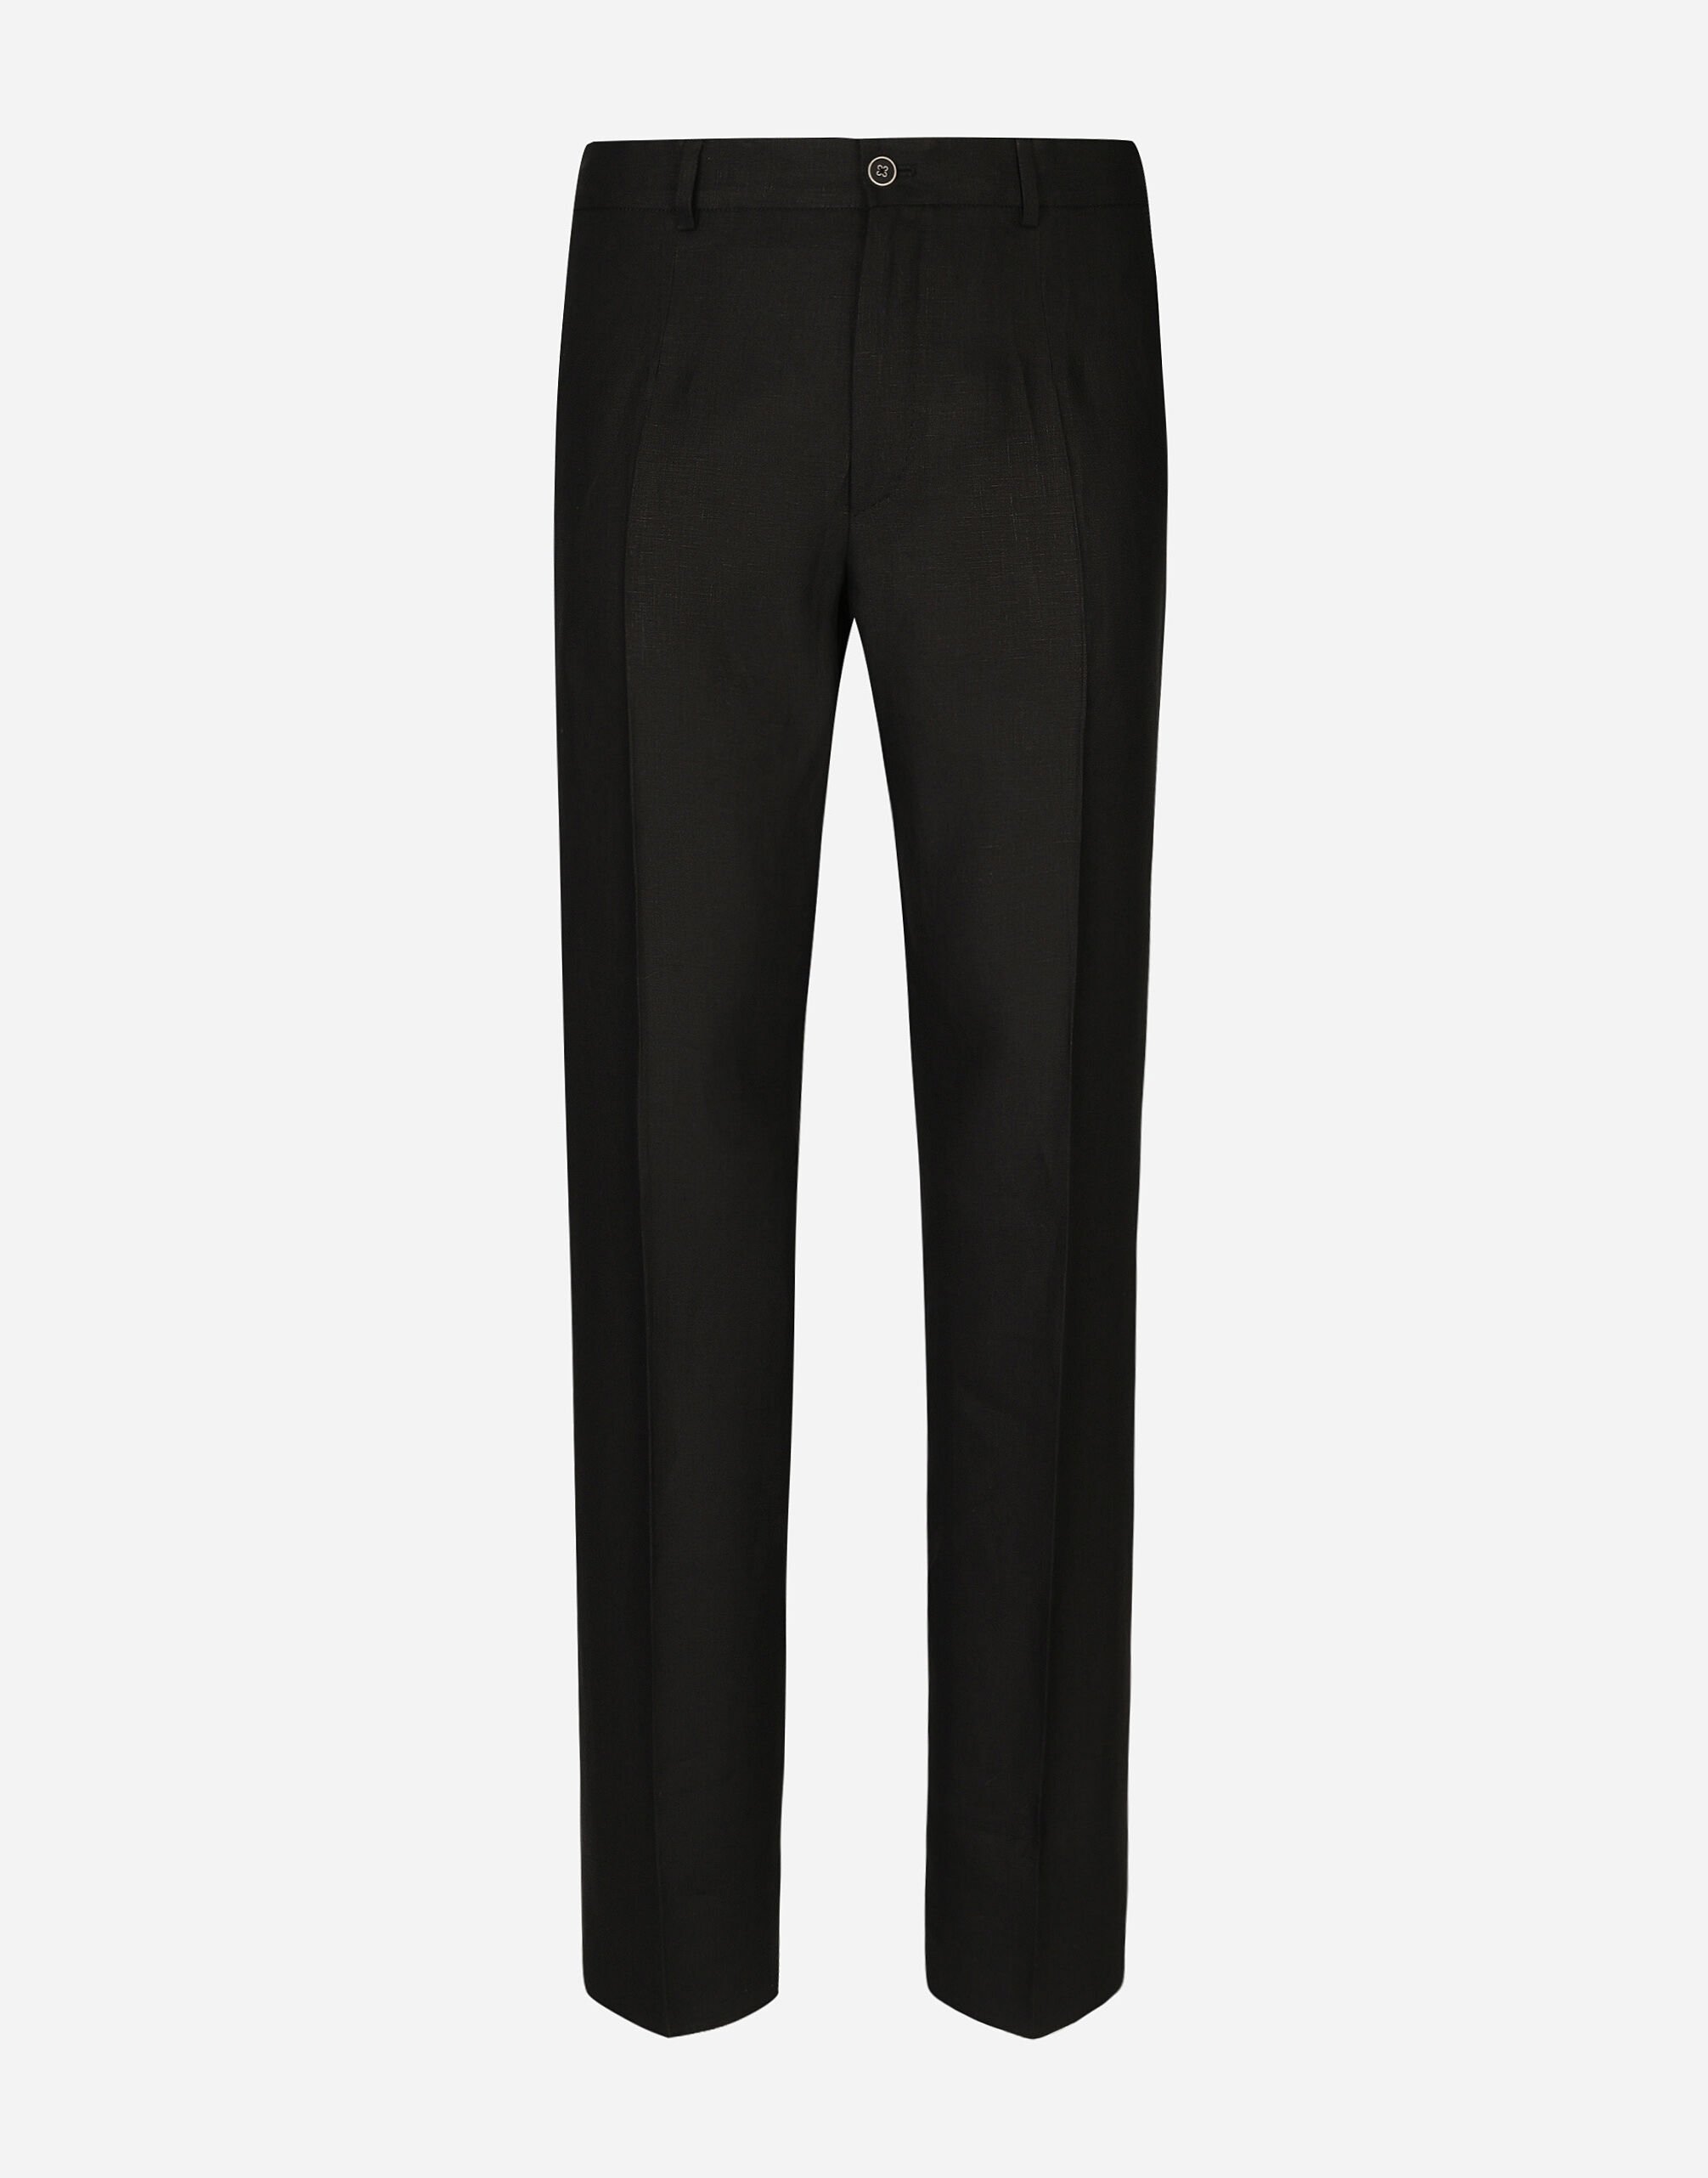 Dolce & Gabbana Tailored stretch cotton pants Beige G9AVETGH485